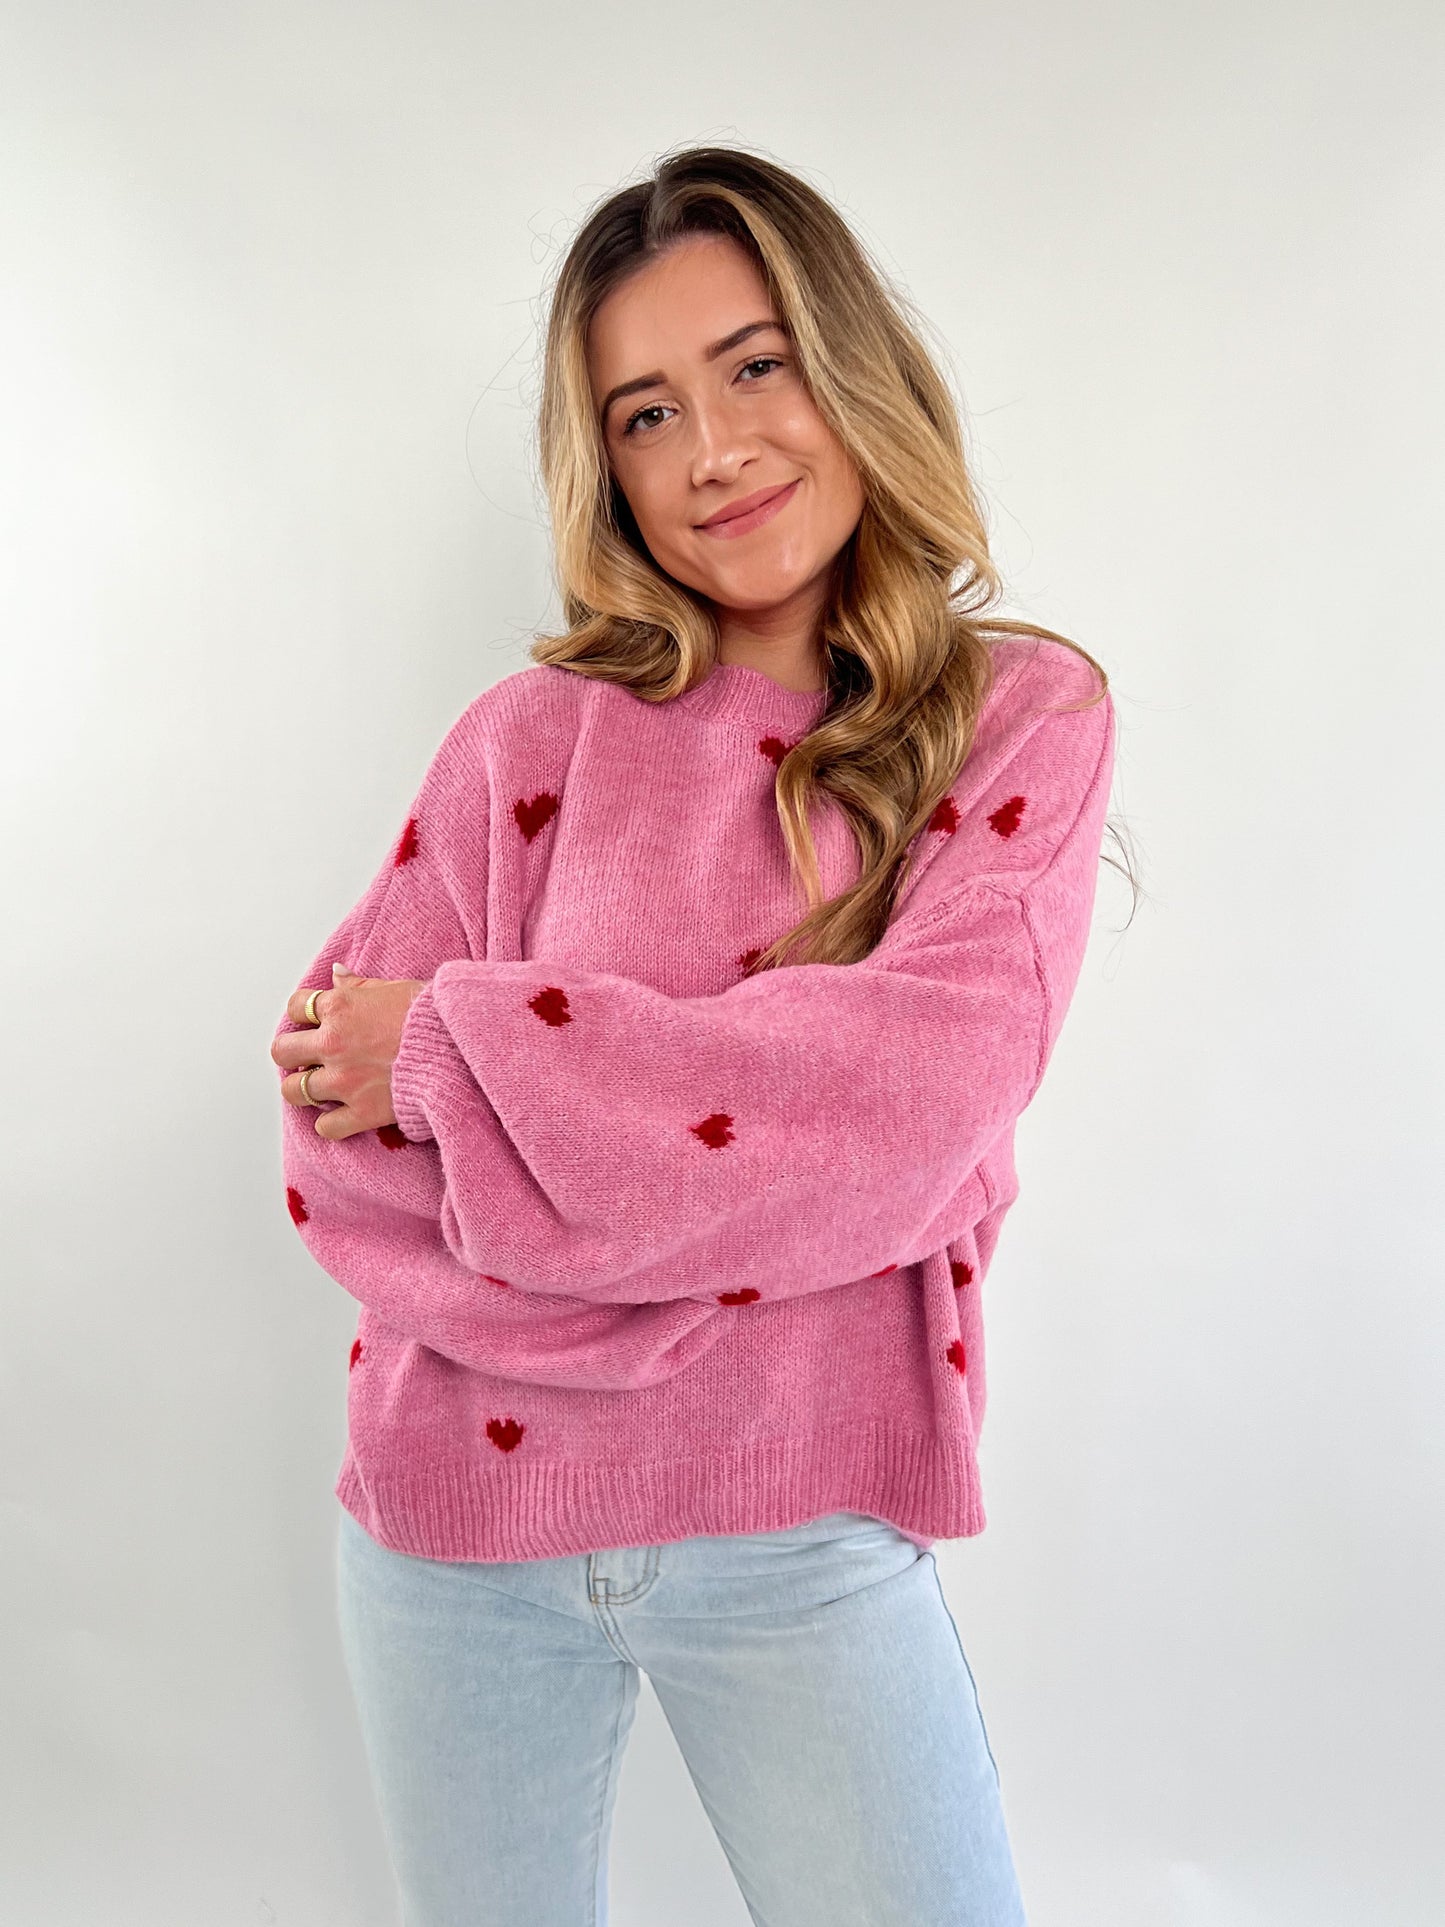 Strick Sweater Herz rosa